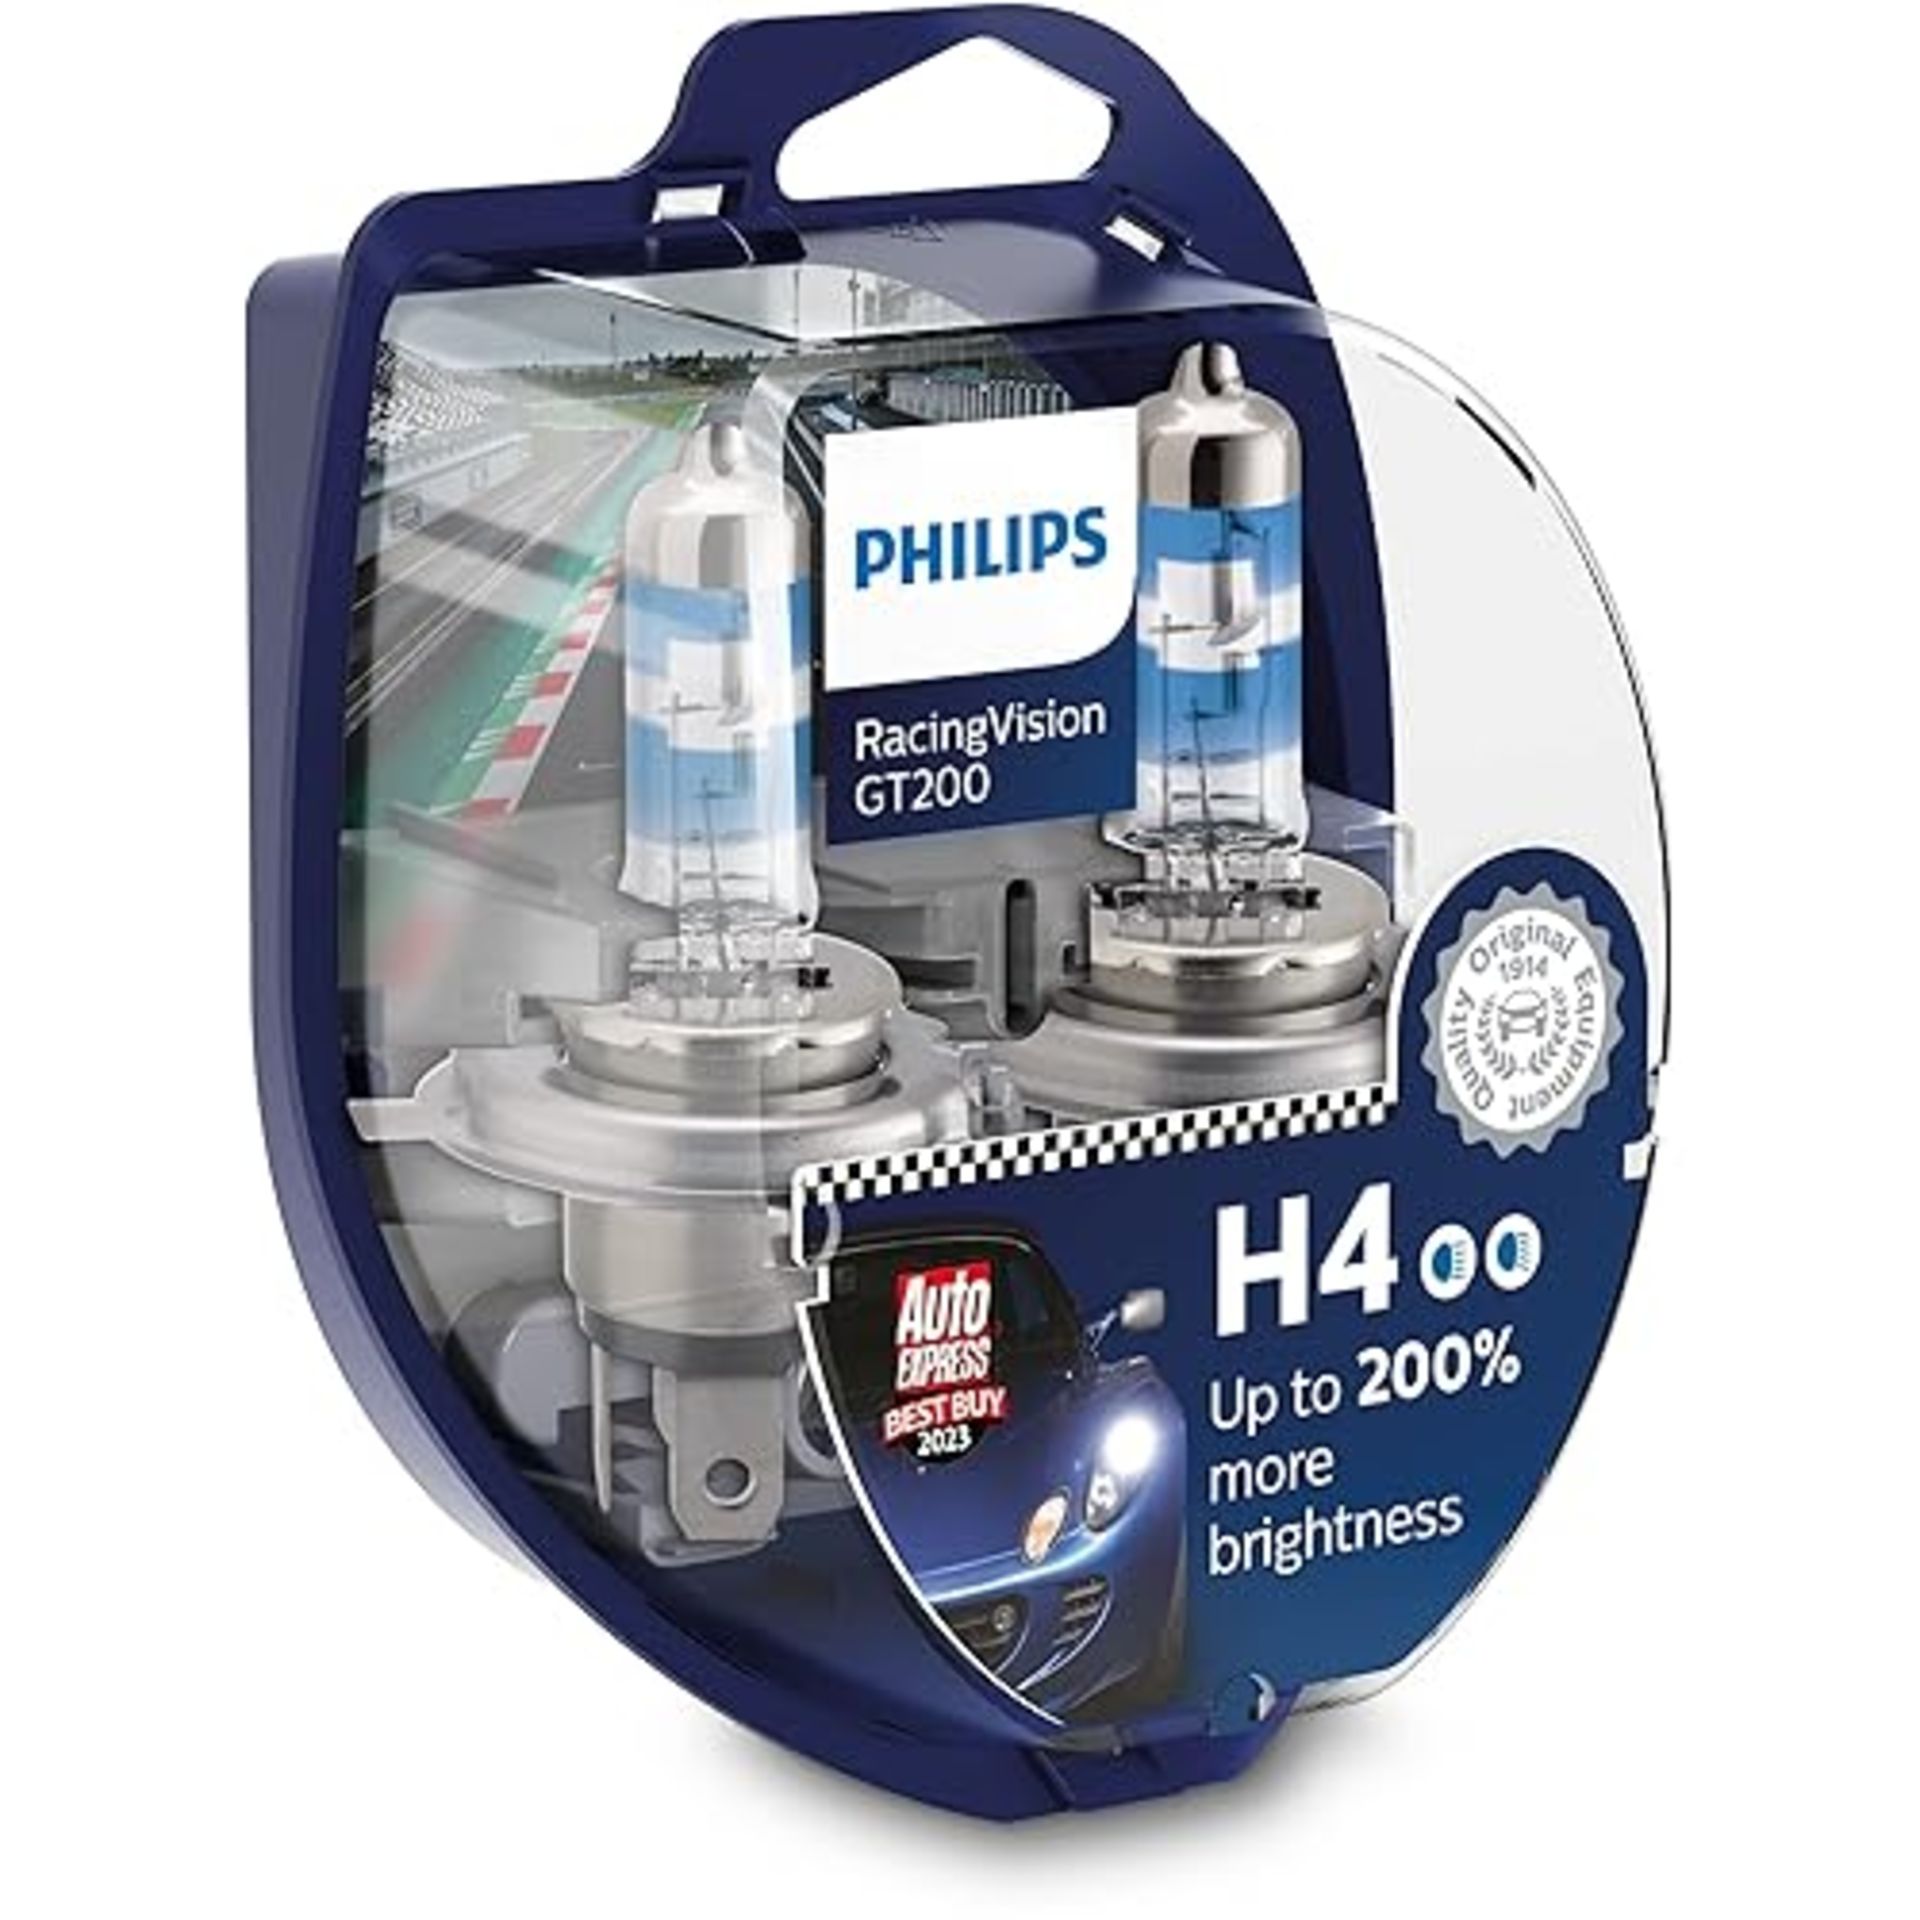 Philips 575528 Racingvision GT200 H4 Car Headlight Bulb +200%, Set of 2